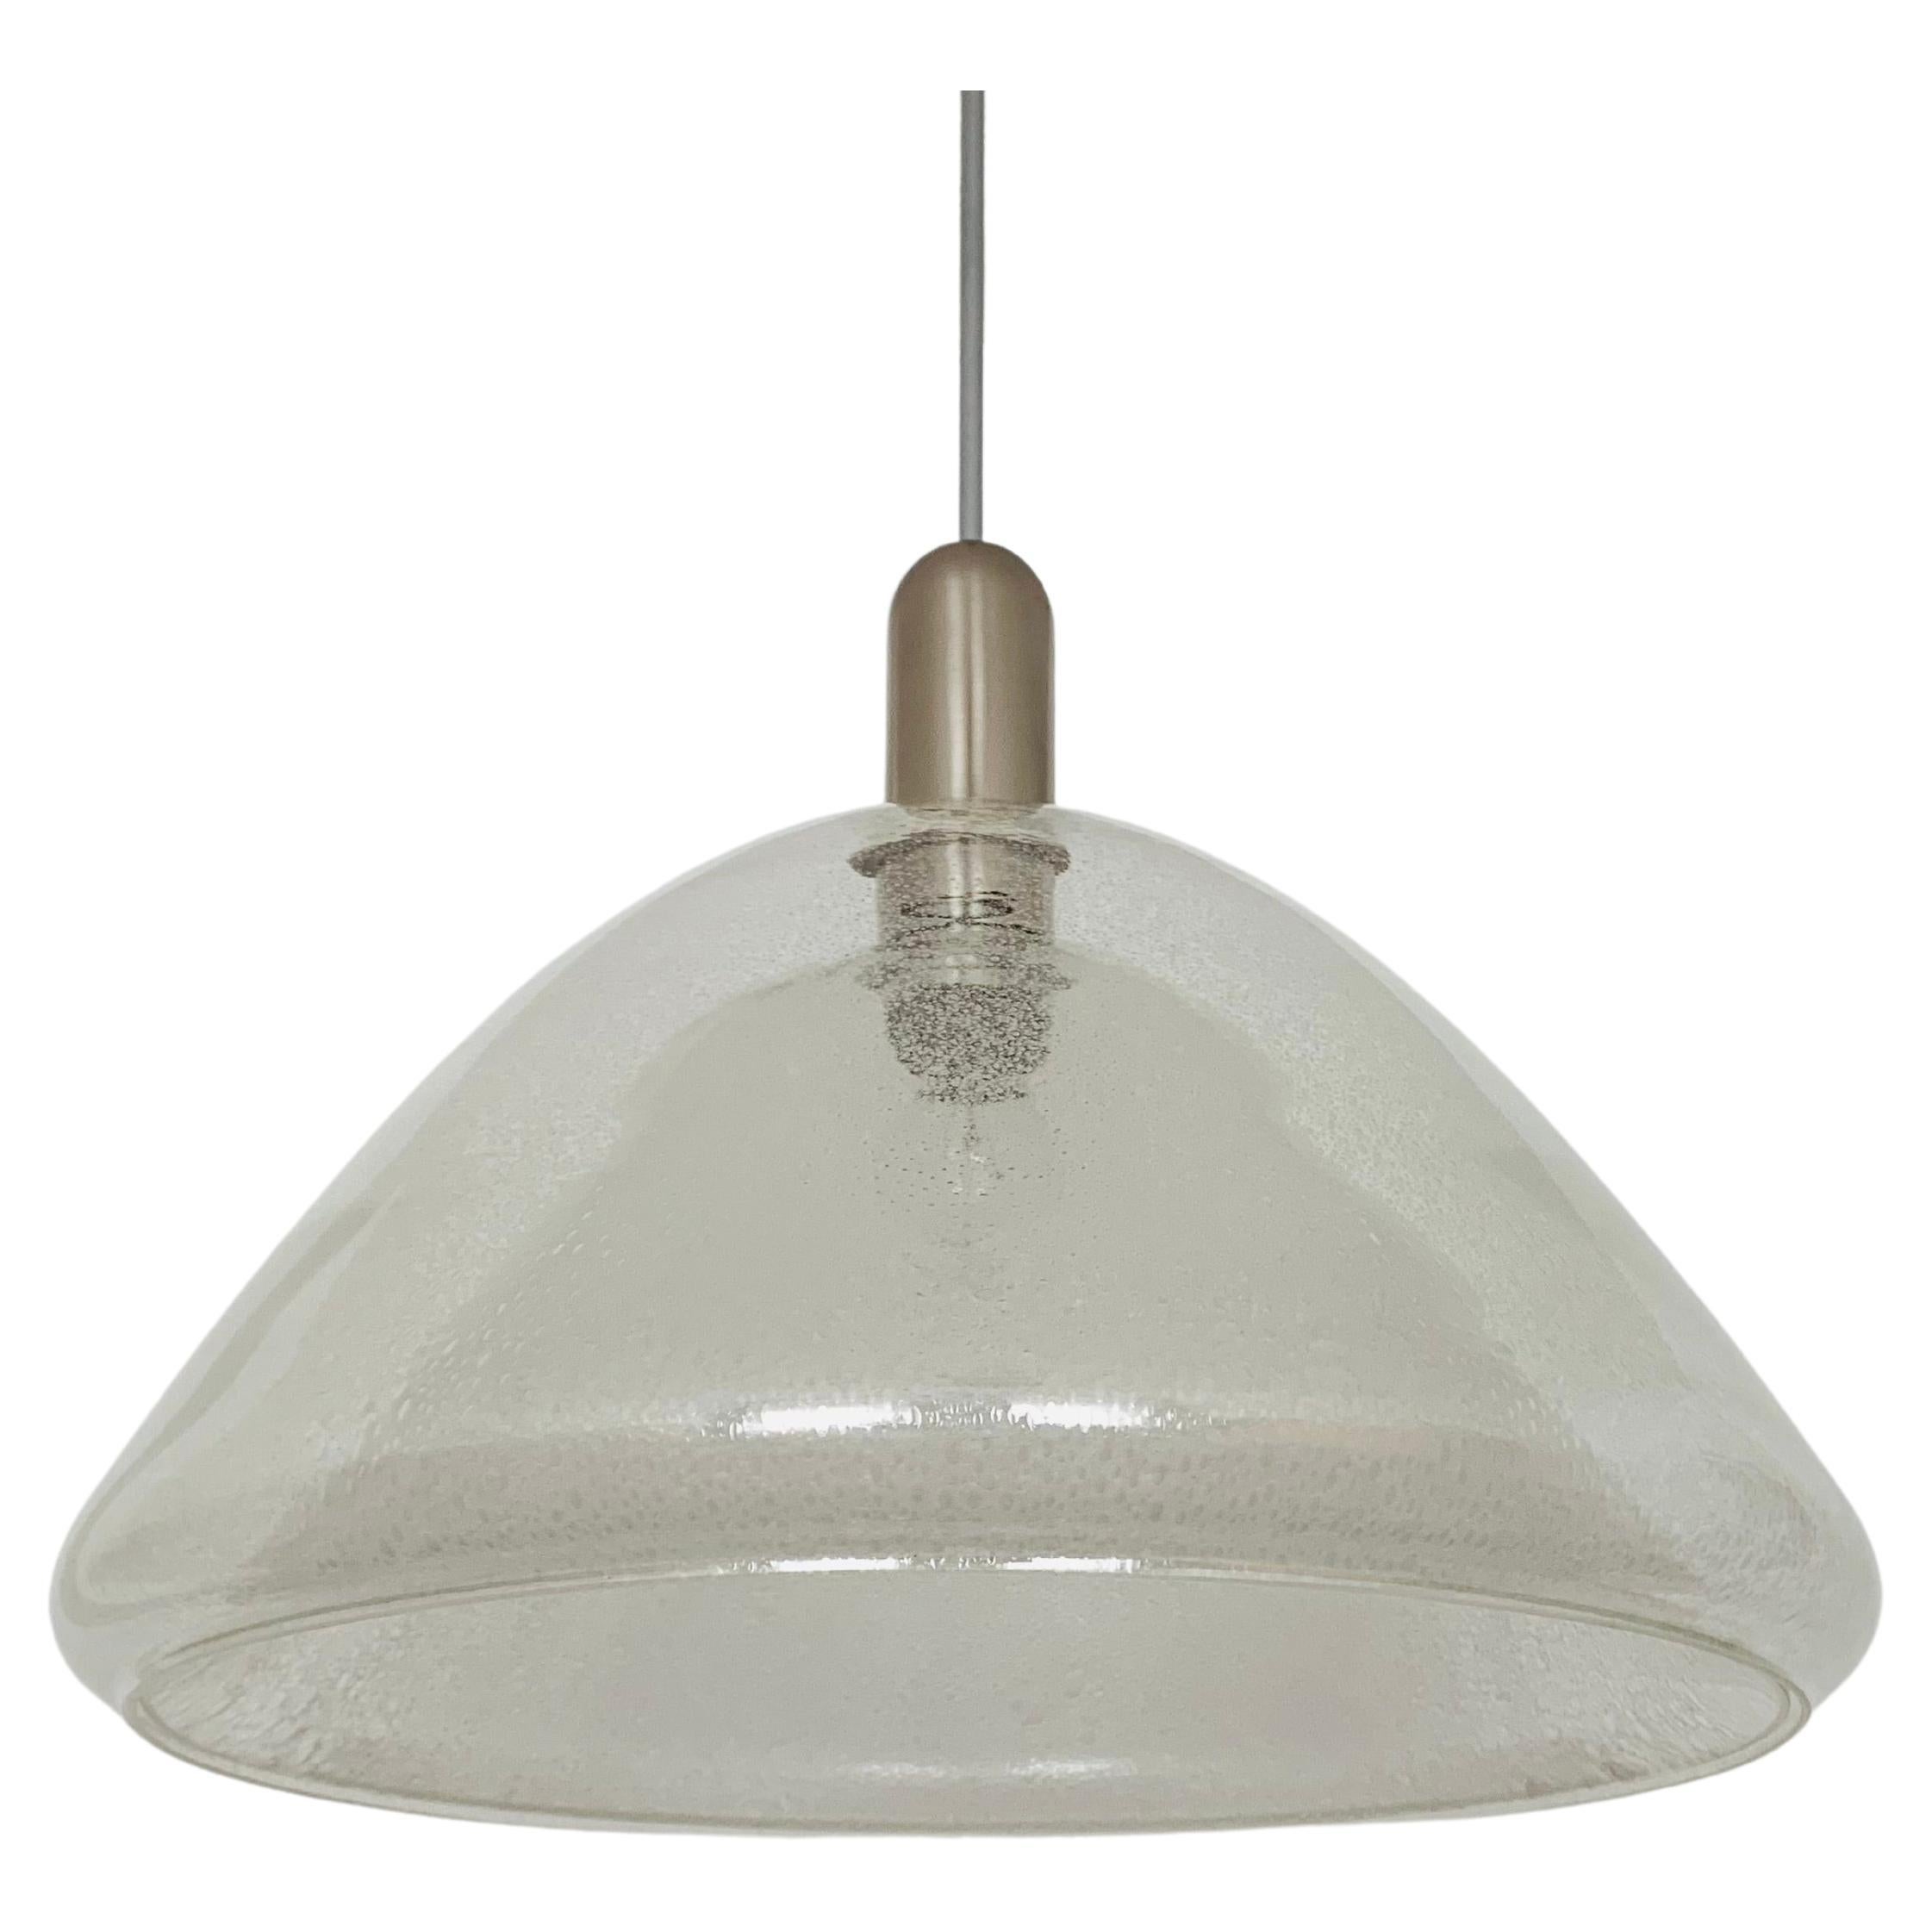 Peleguso glass lamp by Carlo Nason for Mazzega